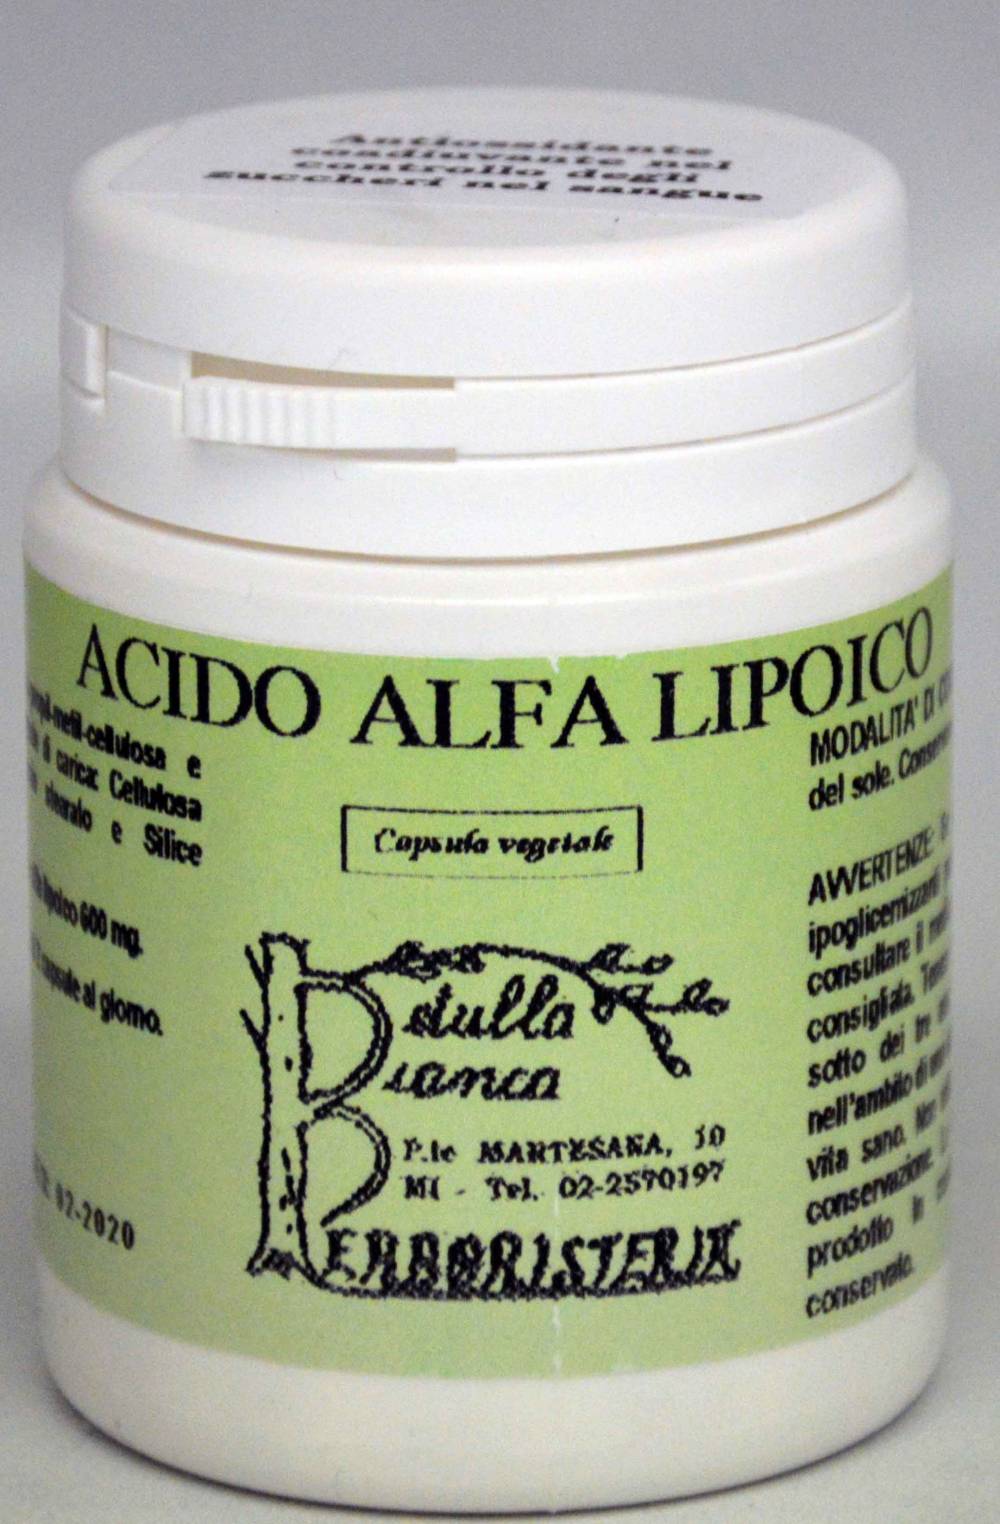 Acido Alfa Lipoico capsule Erboristeria La Betulla Bianca